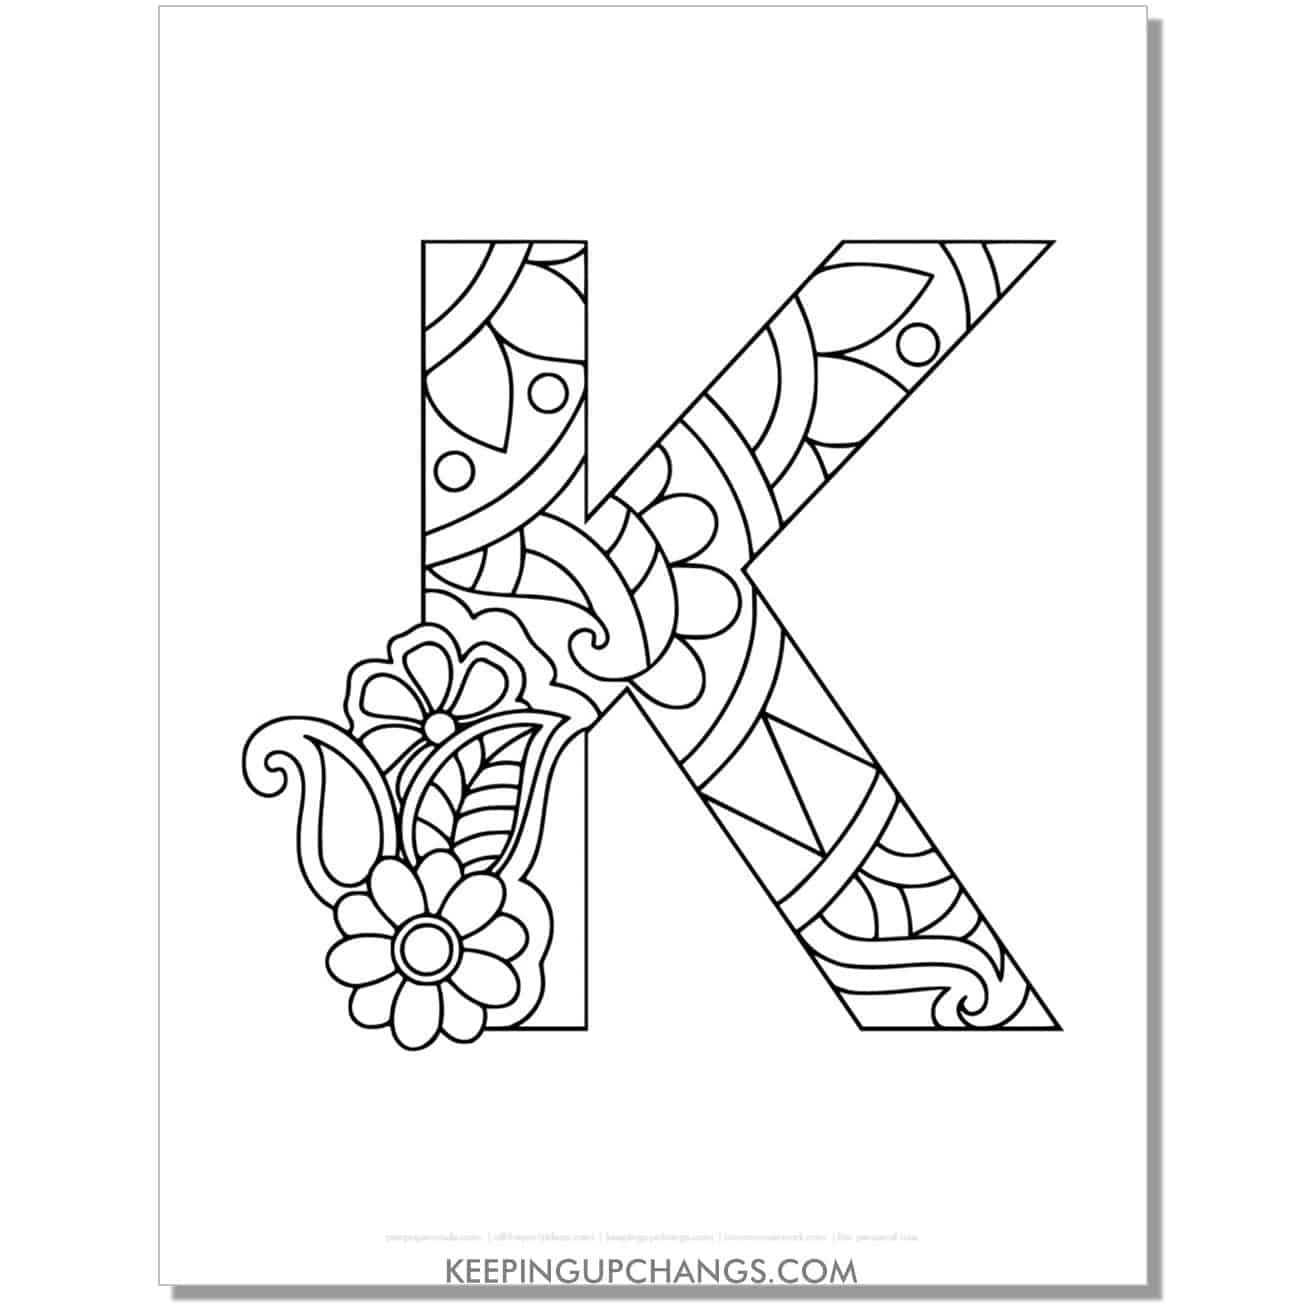 free alphabet k to color, intricate flower mandala zentangle.